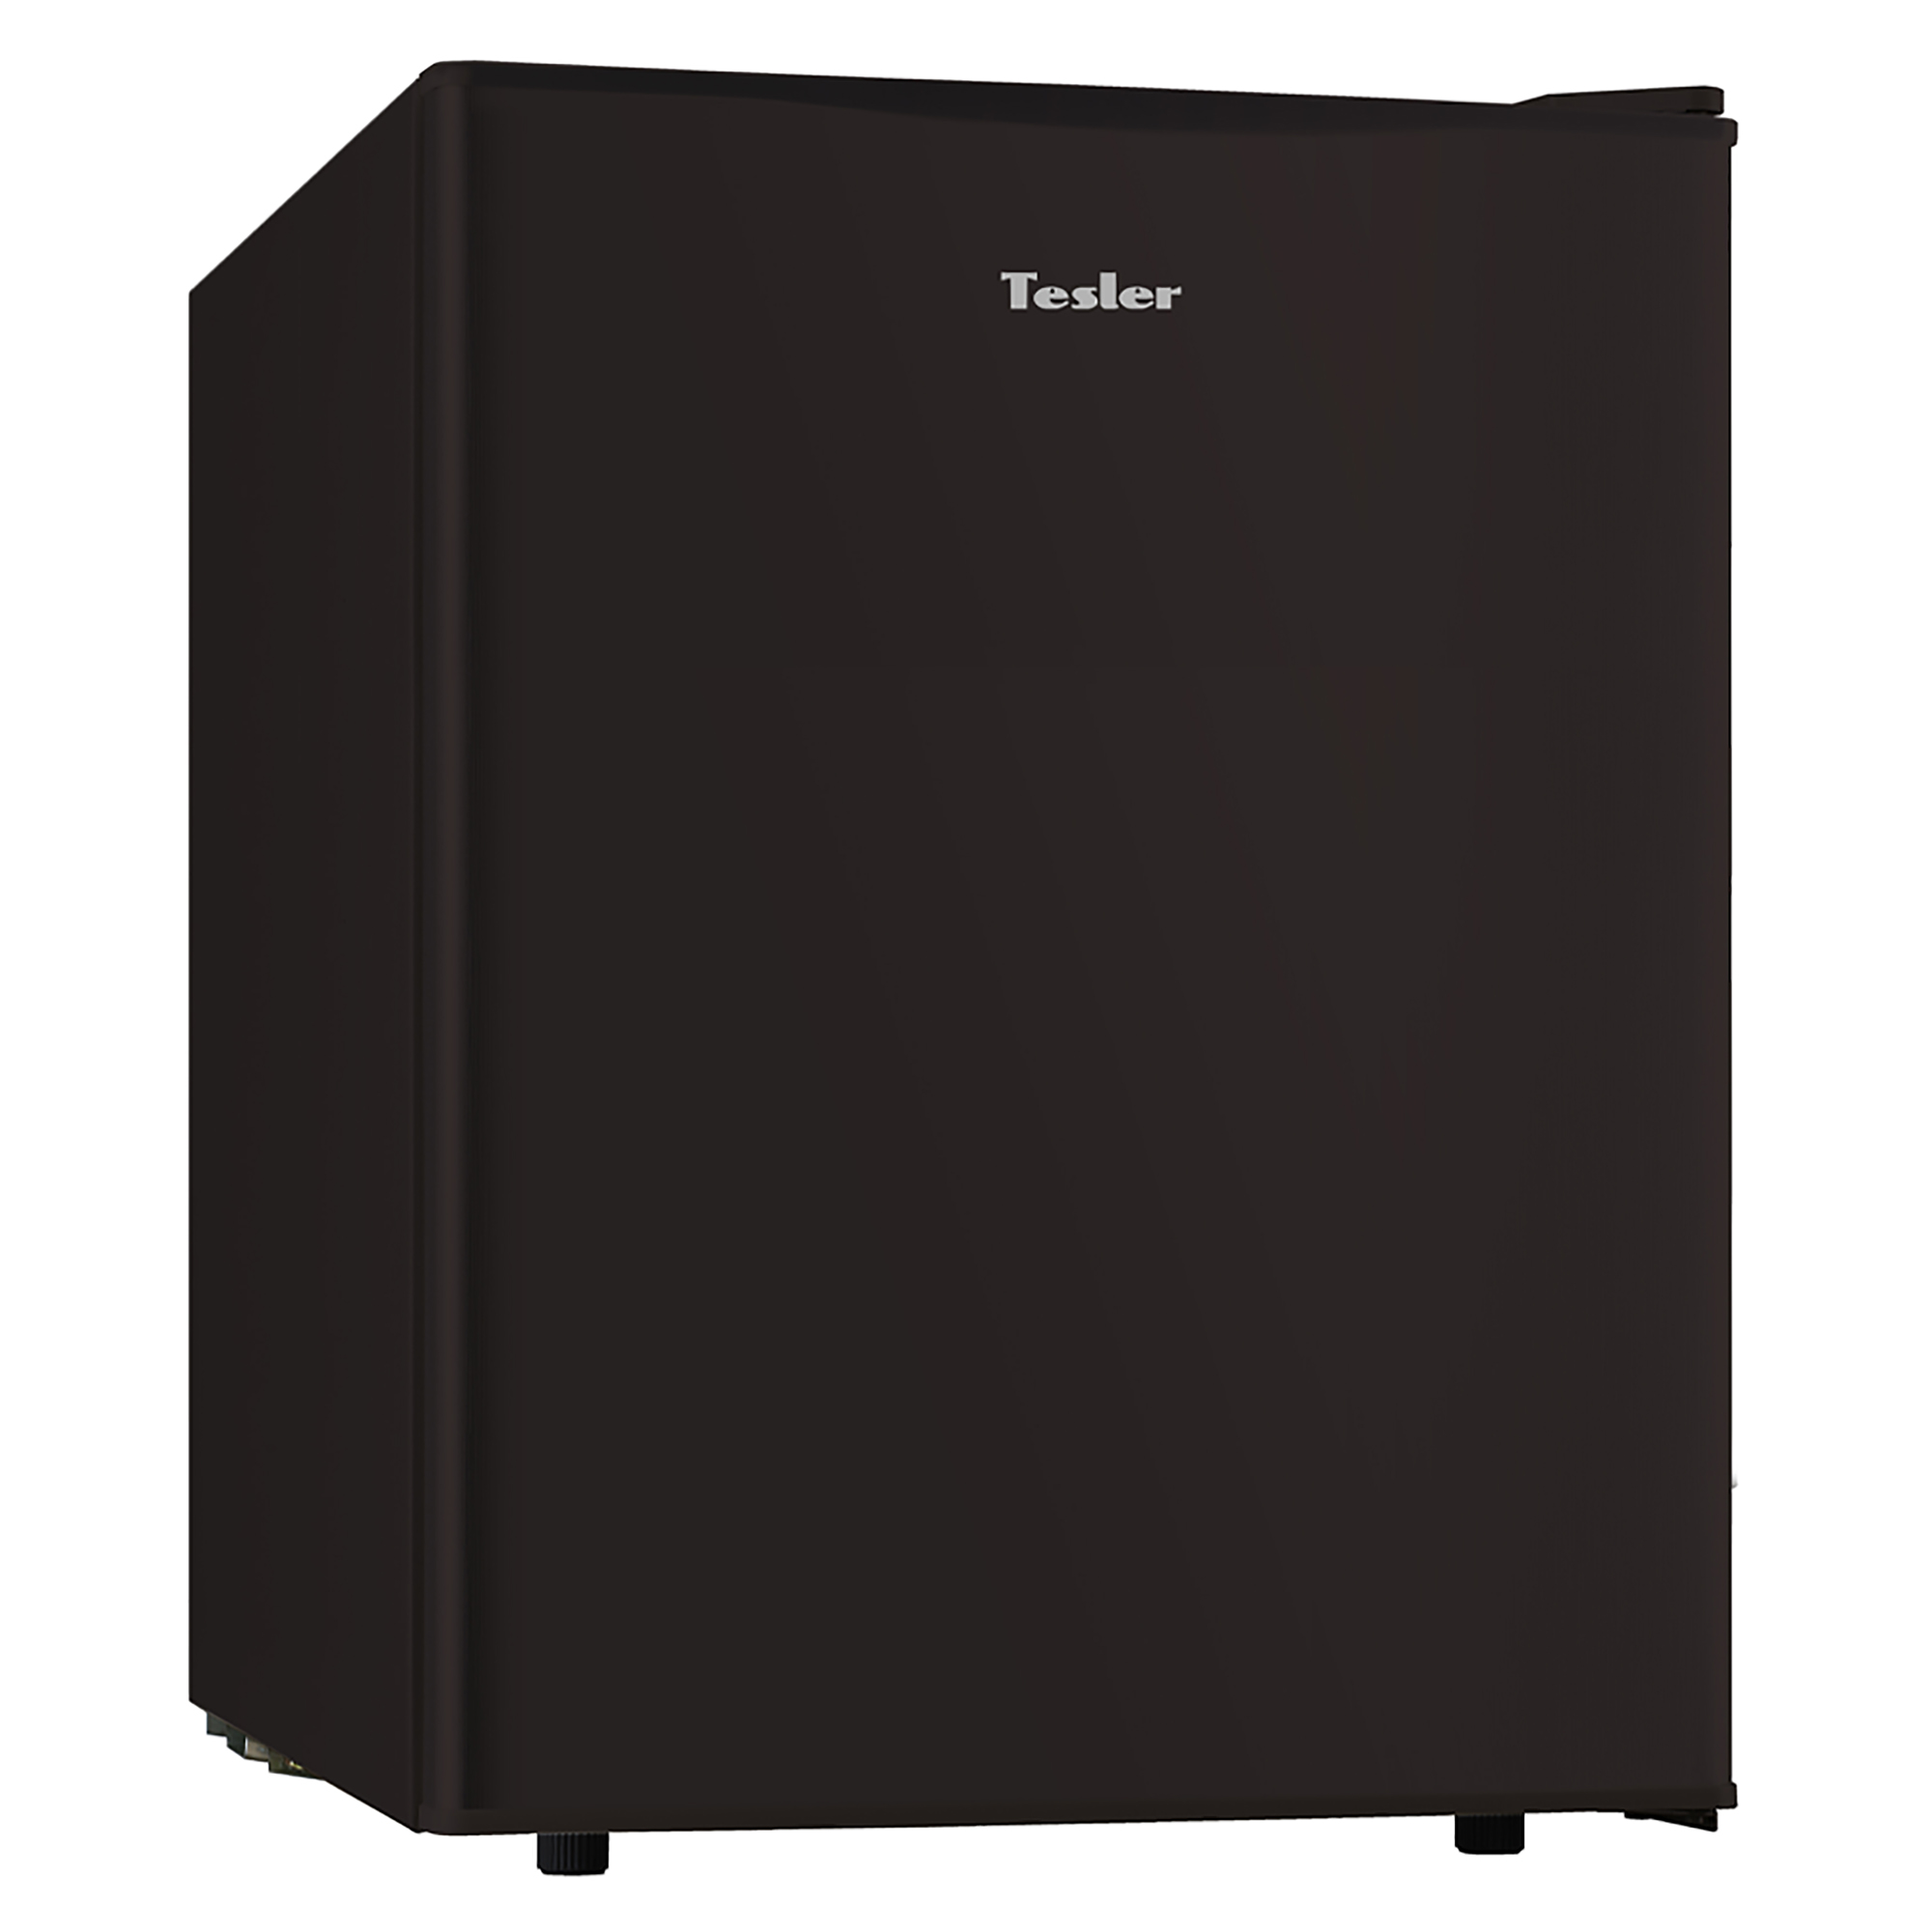 фото Холодильник tesler rc-73 dark brown